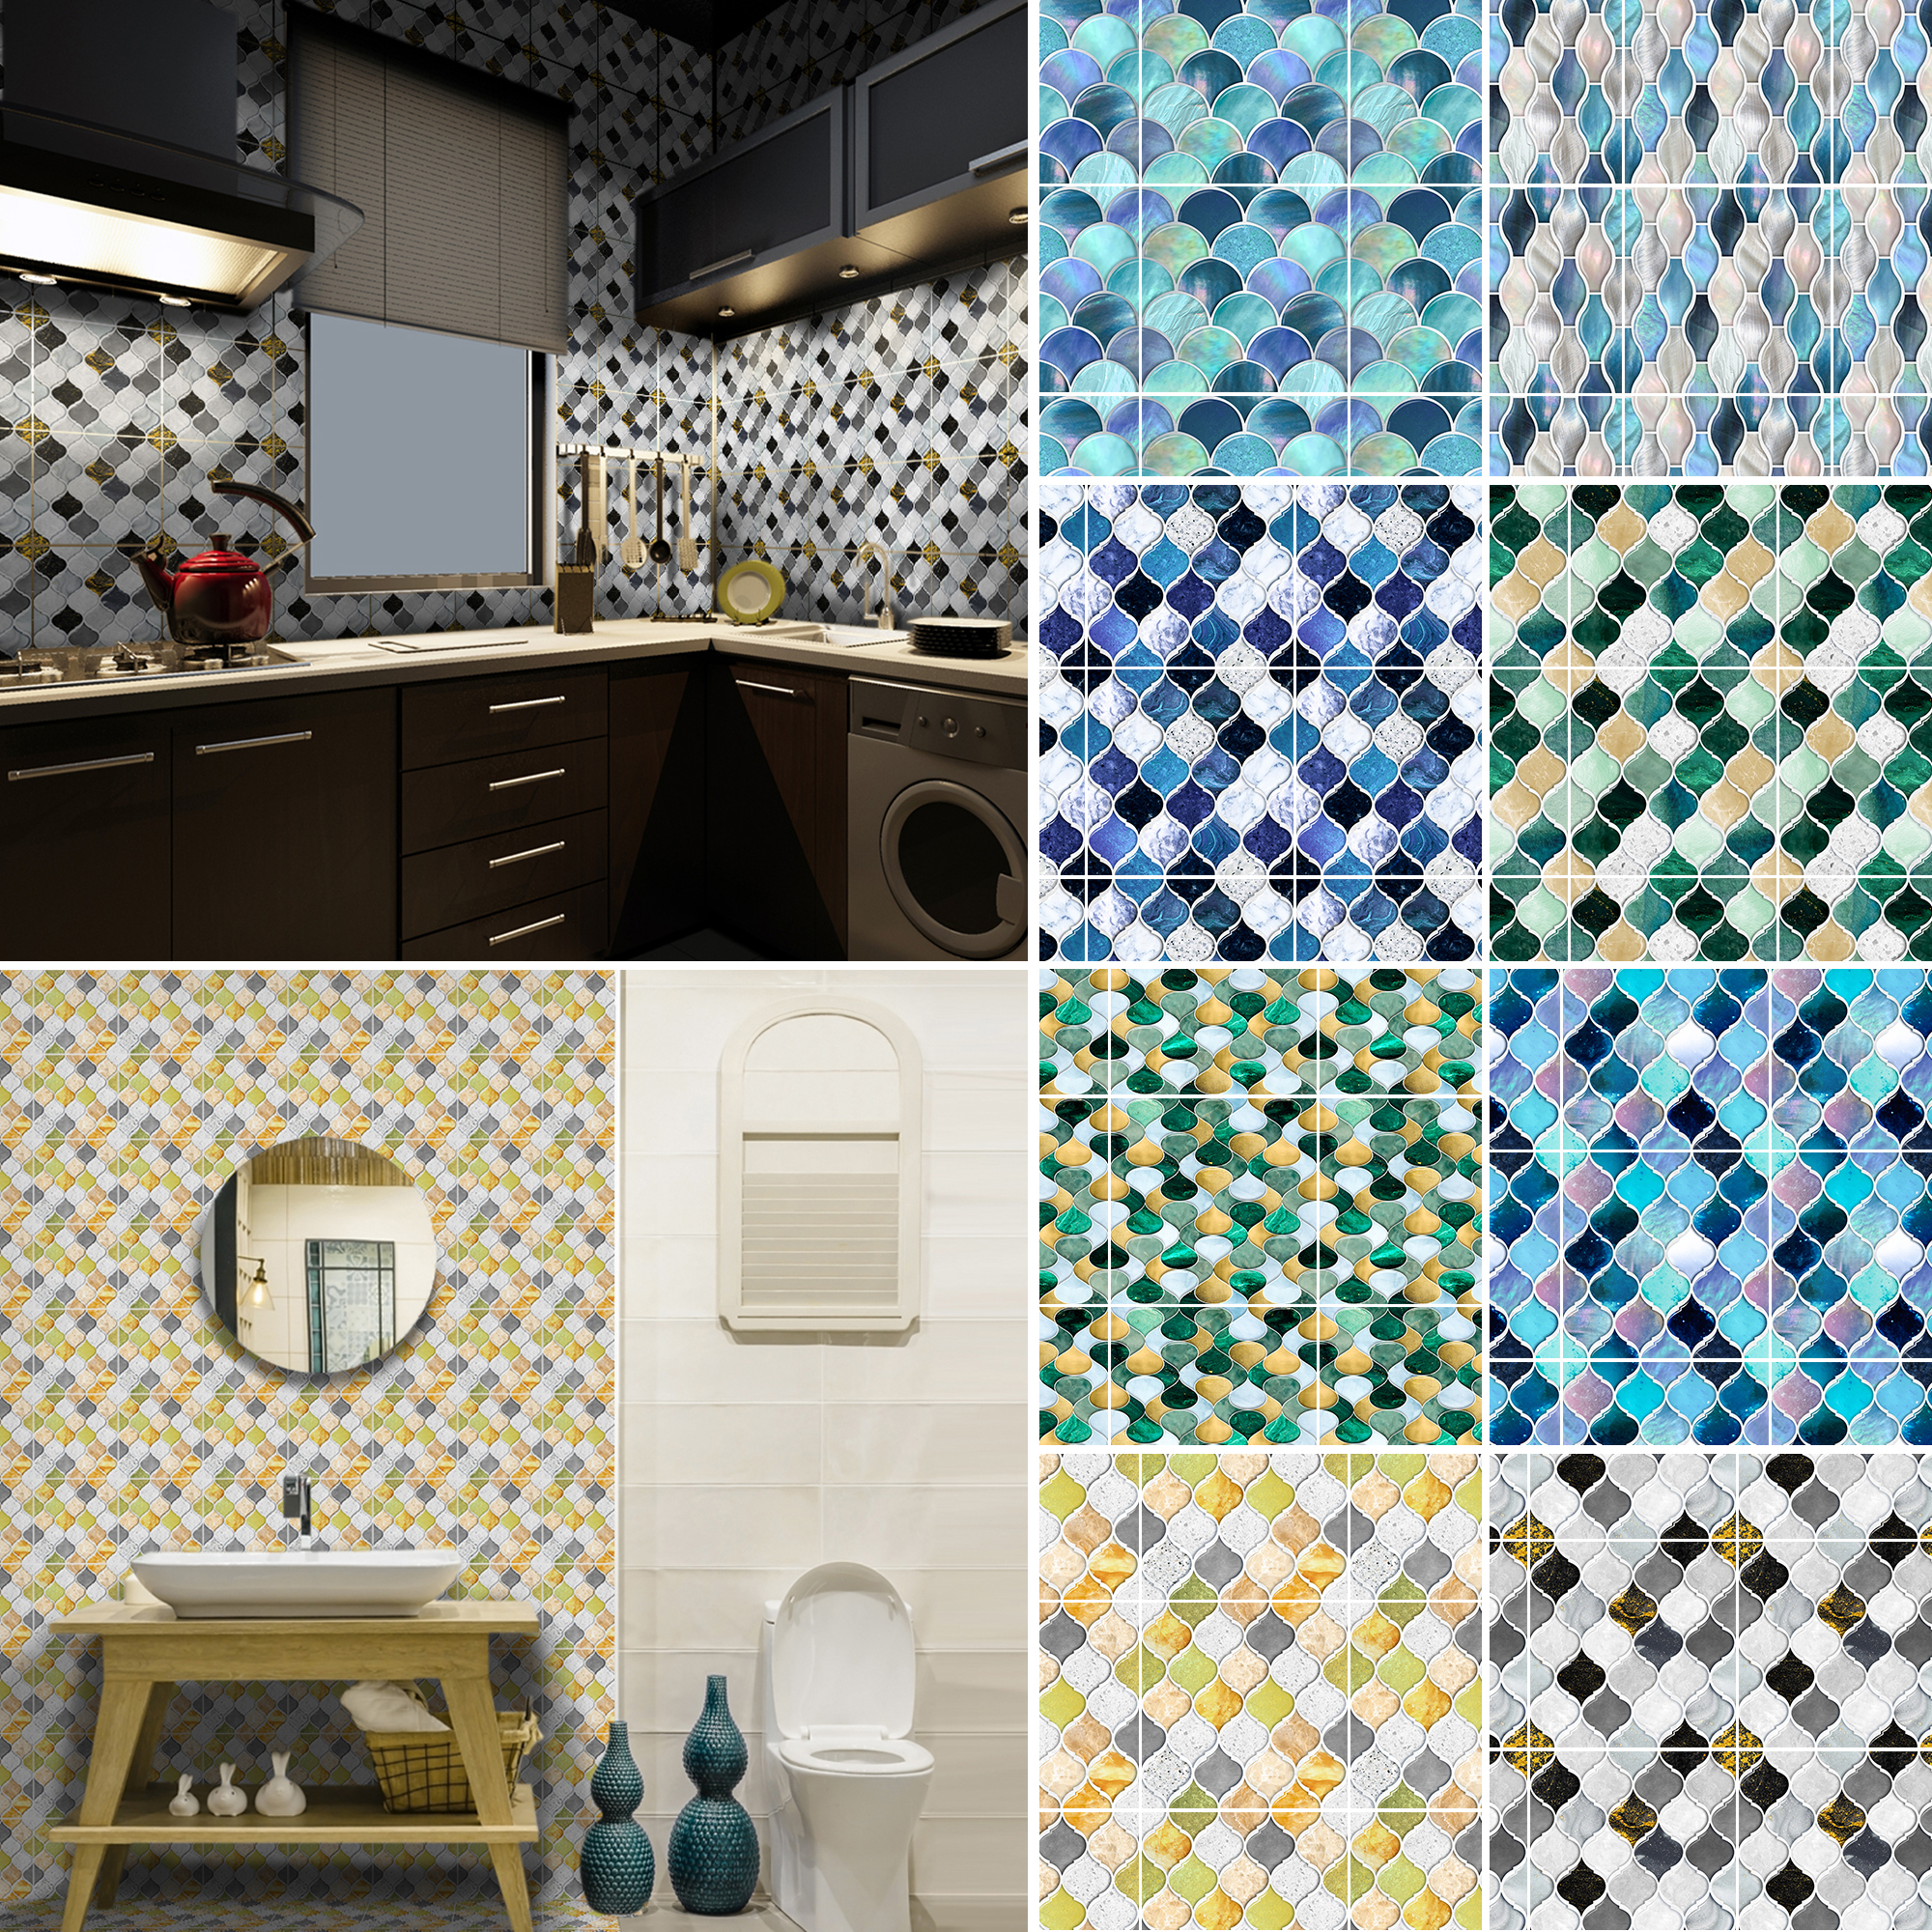 100PCS Self Adhesive Mosaic Tile Sticker Home Kitchen Decor Art Wall Decal